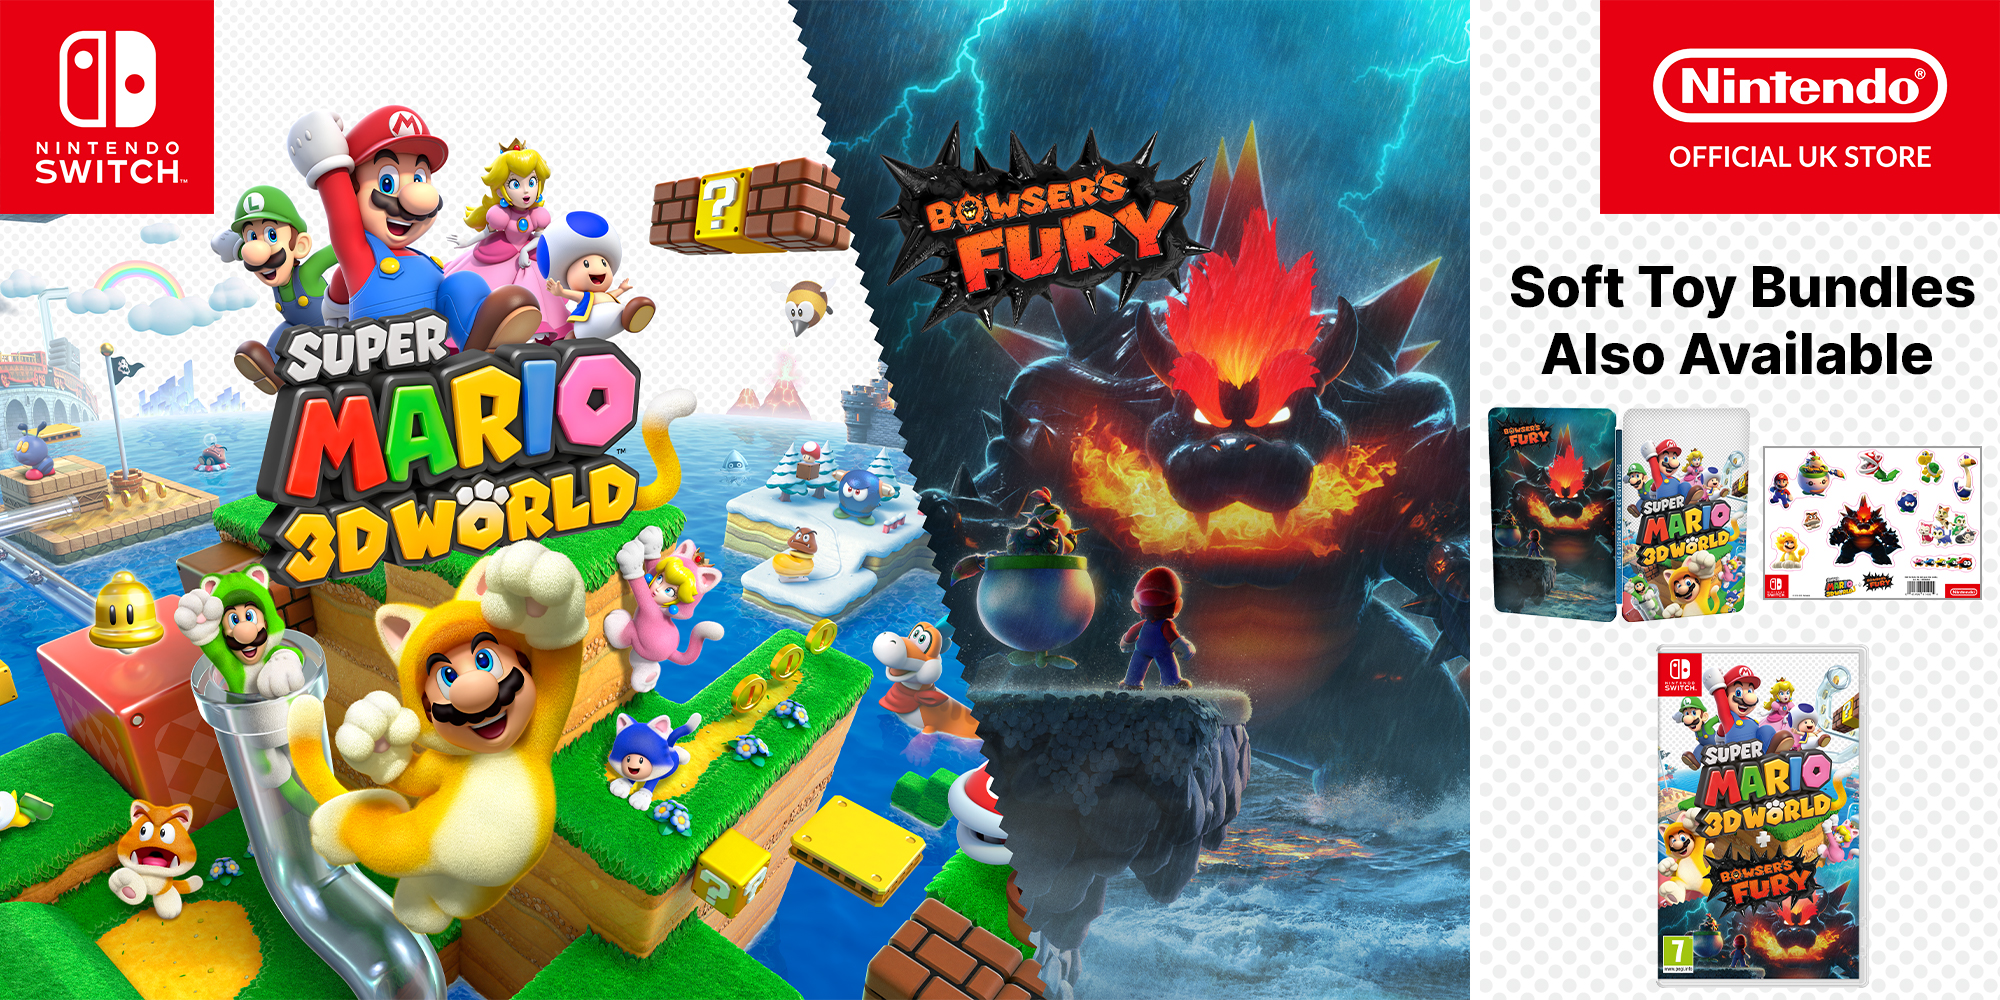  Super Mario 3D World + Bowser's Fury - Nintendo Switch (EU  Version) : Video Games